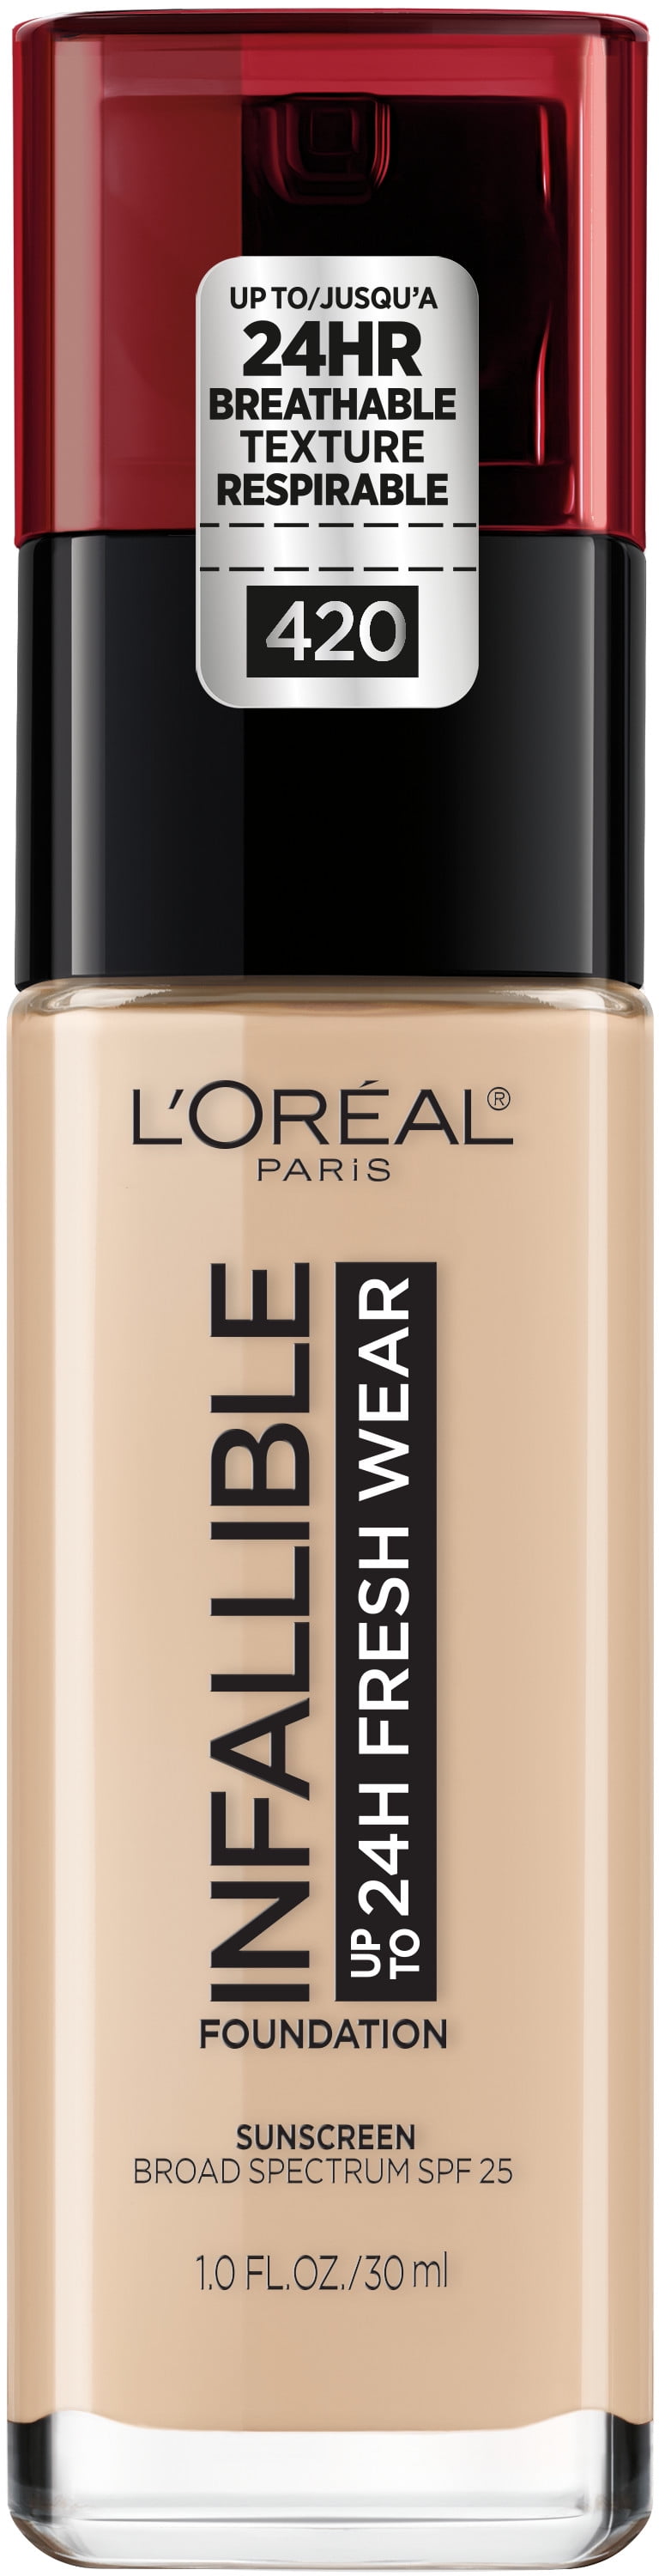 L'Oreal Paris Infallible Up to 24 Hour Fresh Wear Foundation, Lightweight, True Beige, 1 fl oz